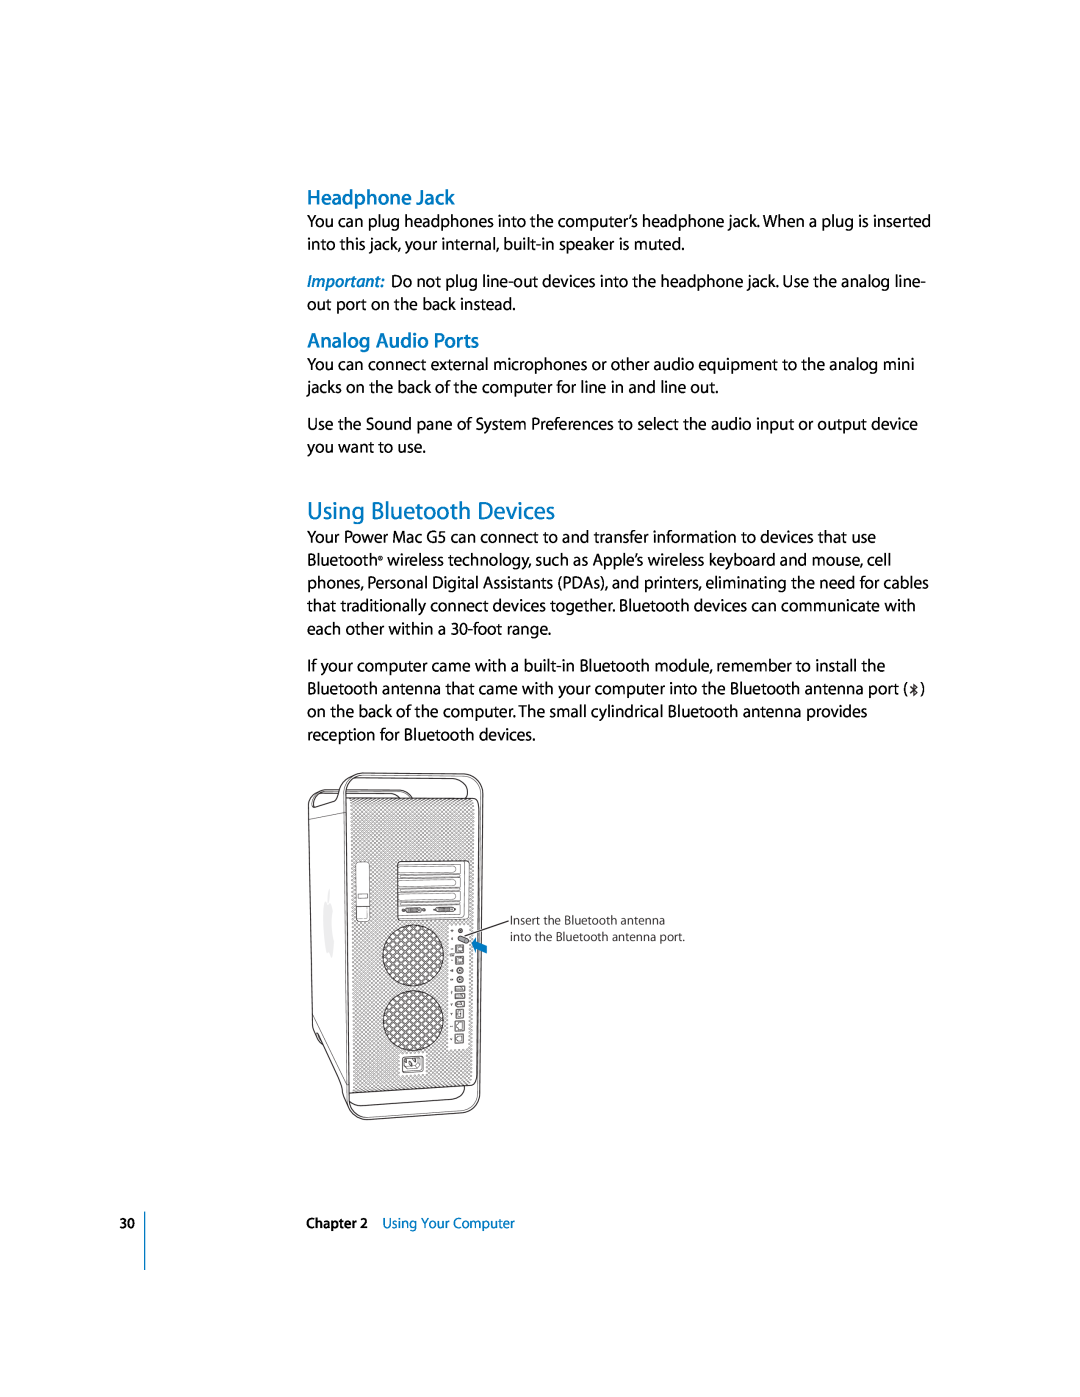 Apple G5 manual Using Bluetooth Devices, Headphone Jack, Analog Audio Ports 